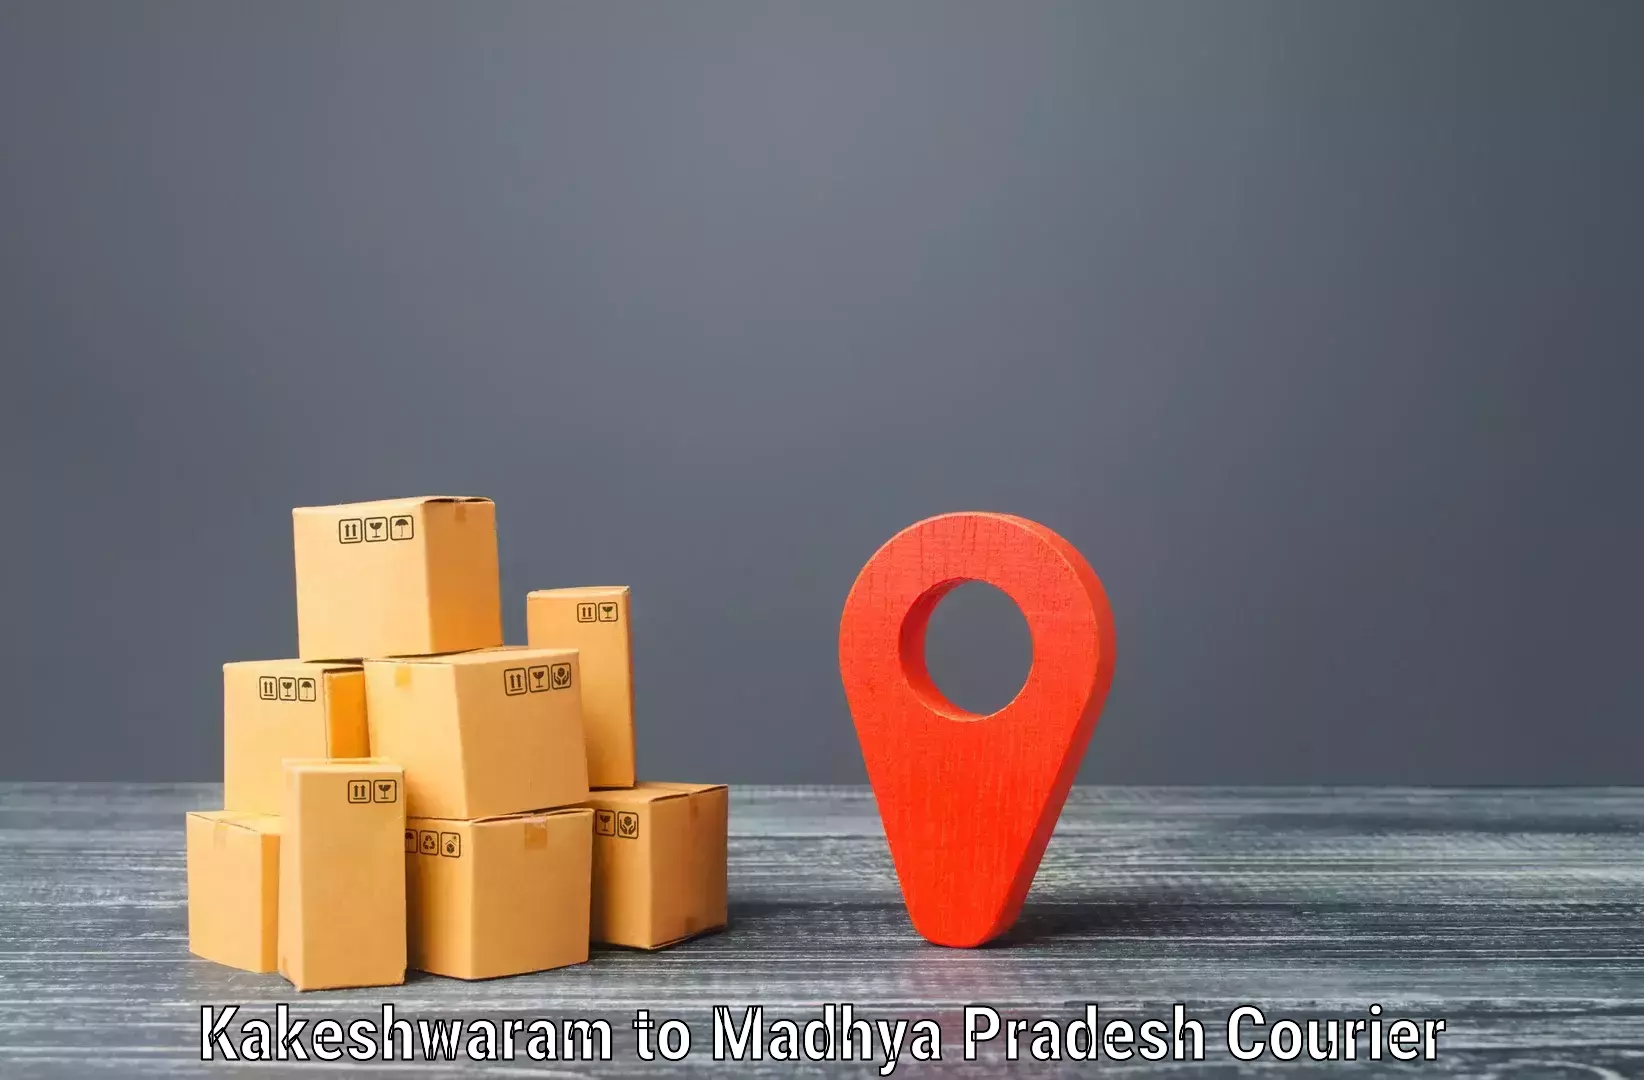 Courier service comparison Kakeshwaram to Maheshwar